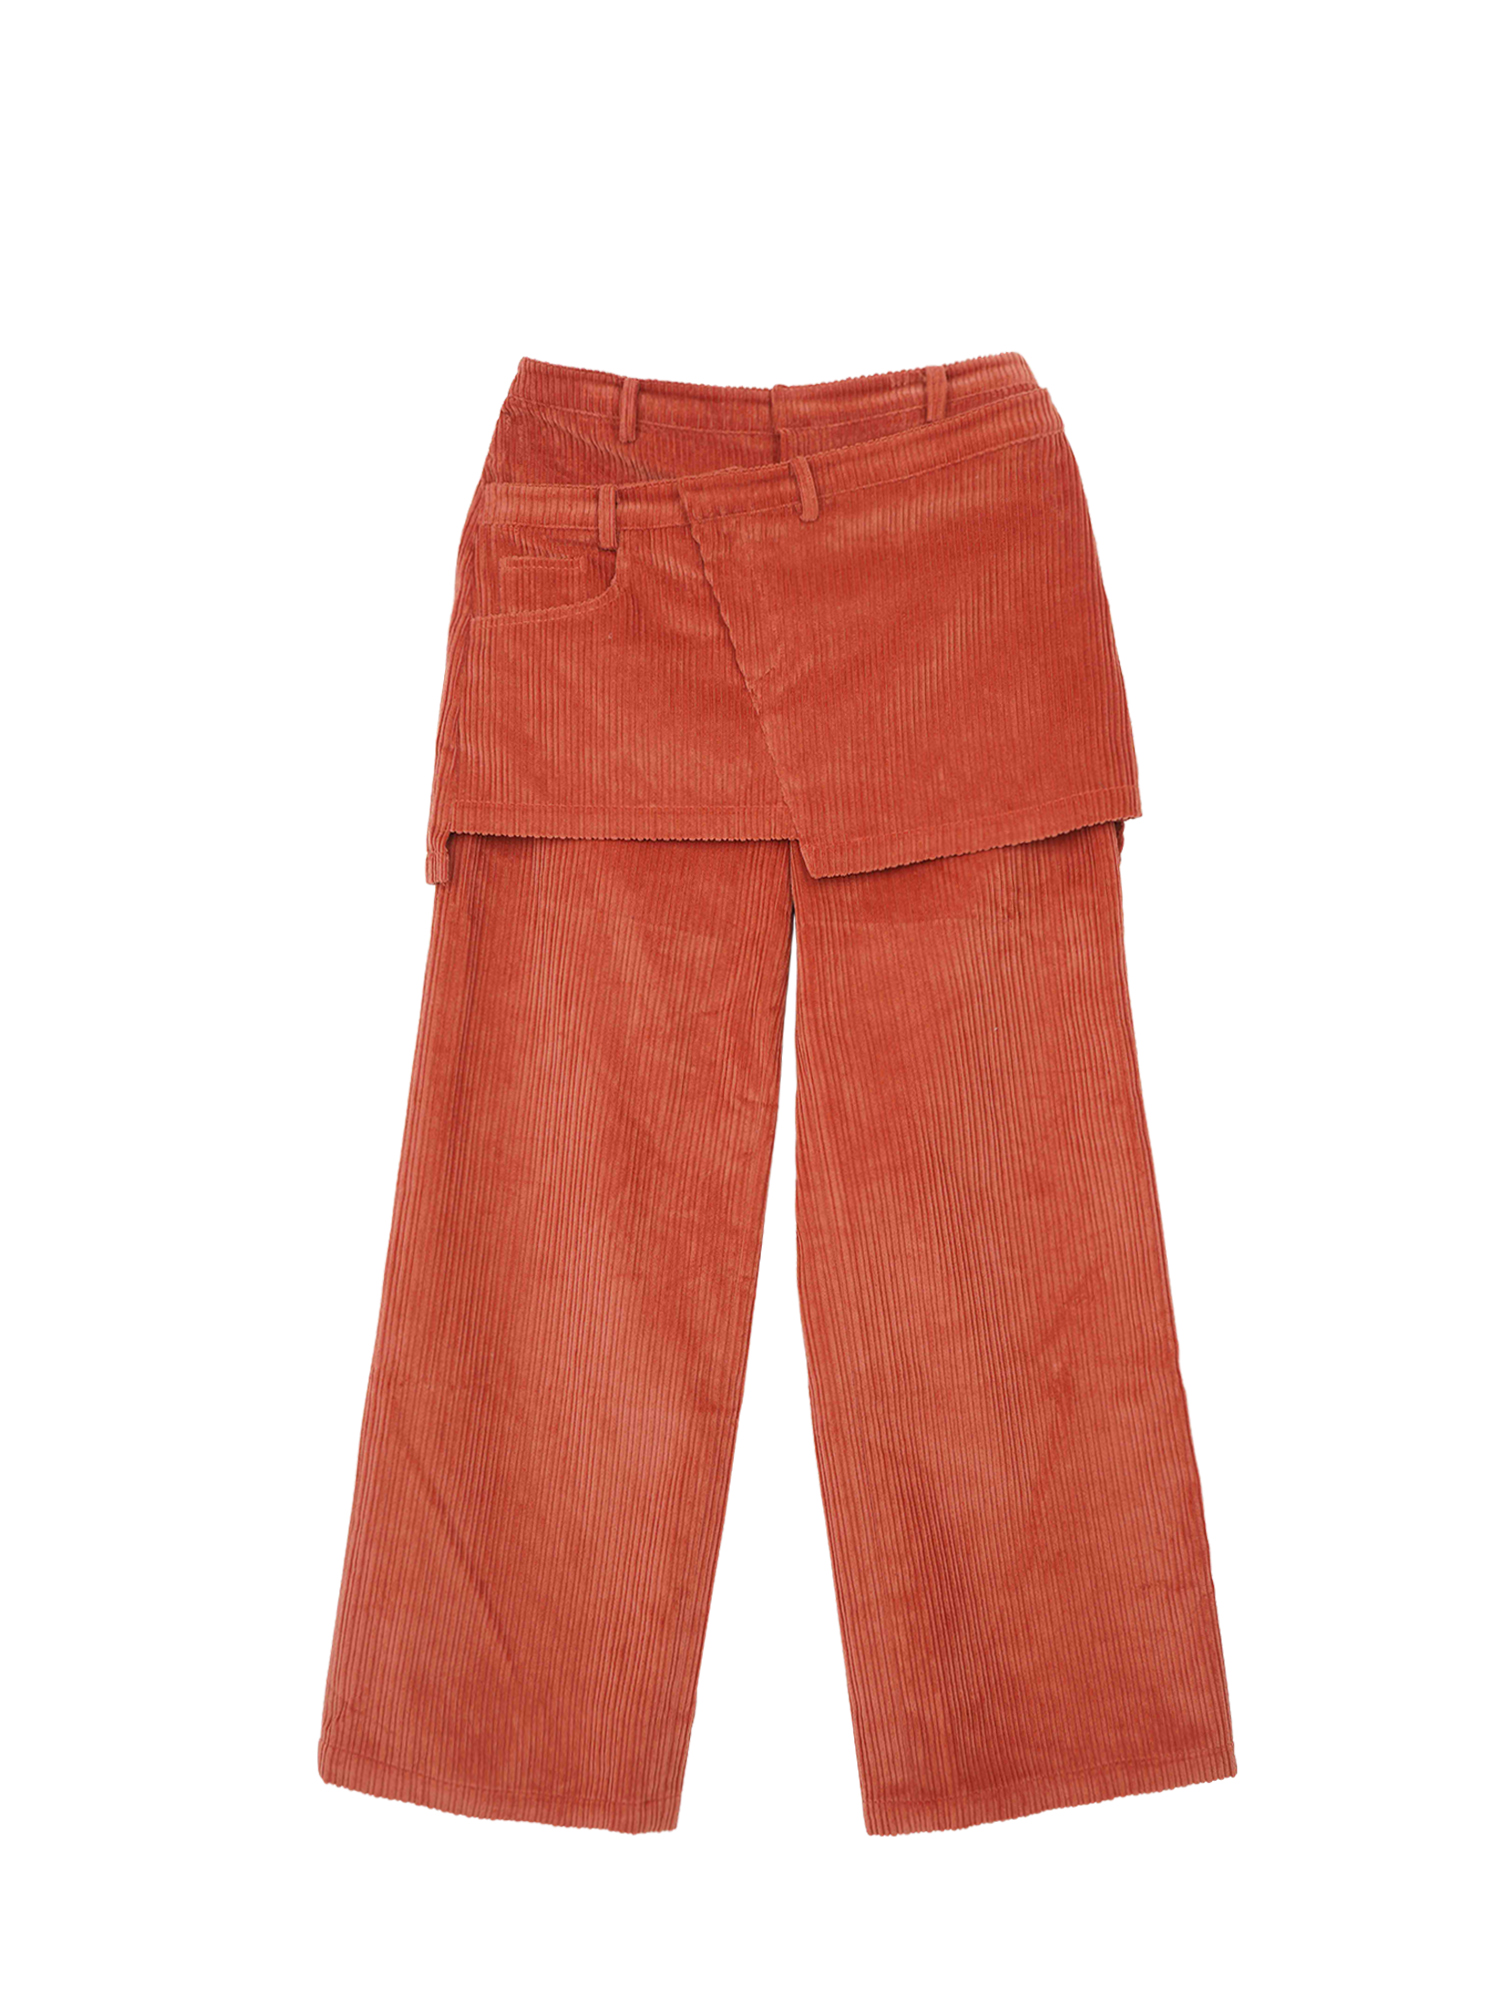 Double Layered Corduroy Pants - Brick orange